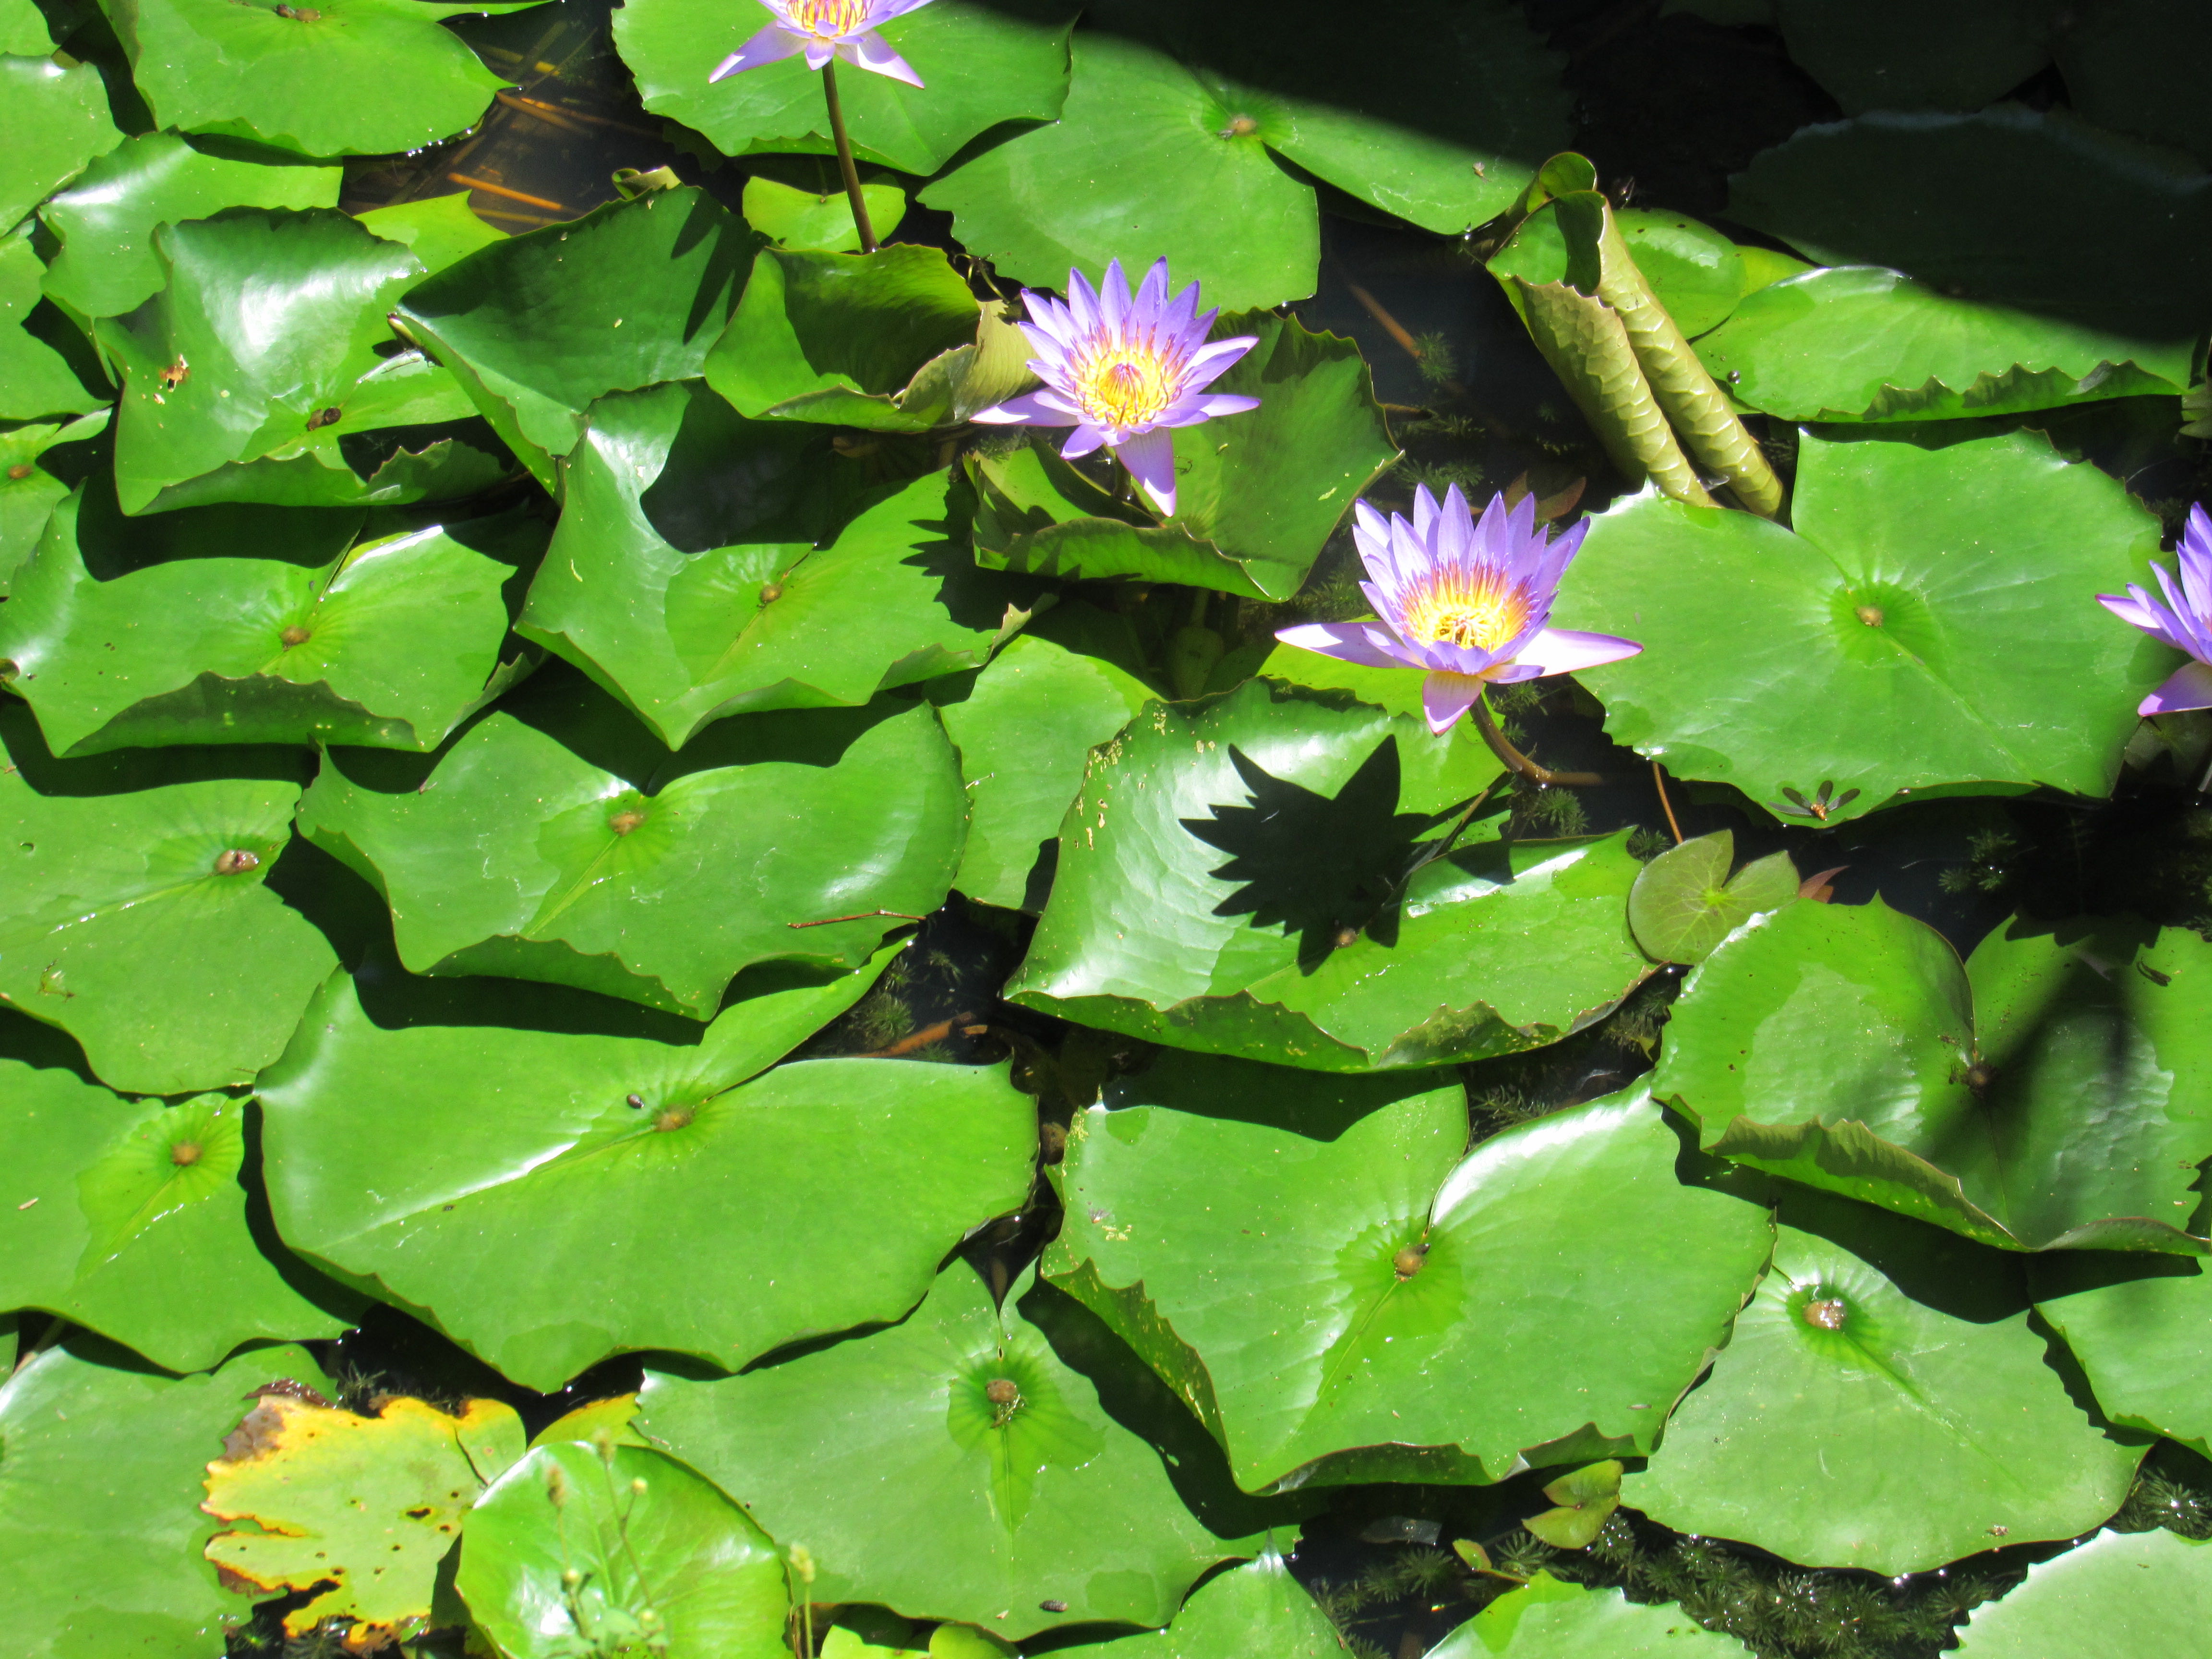 lotus flowers